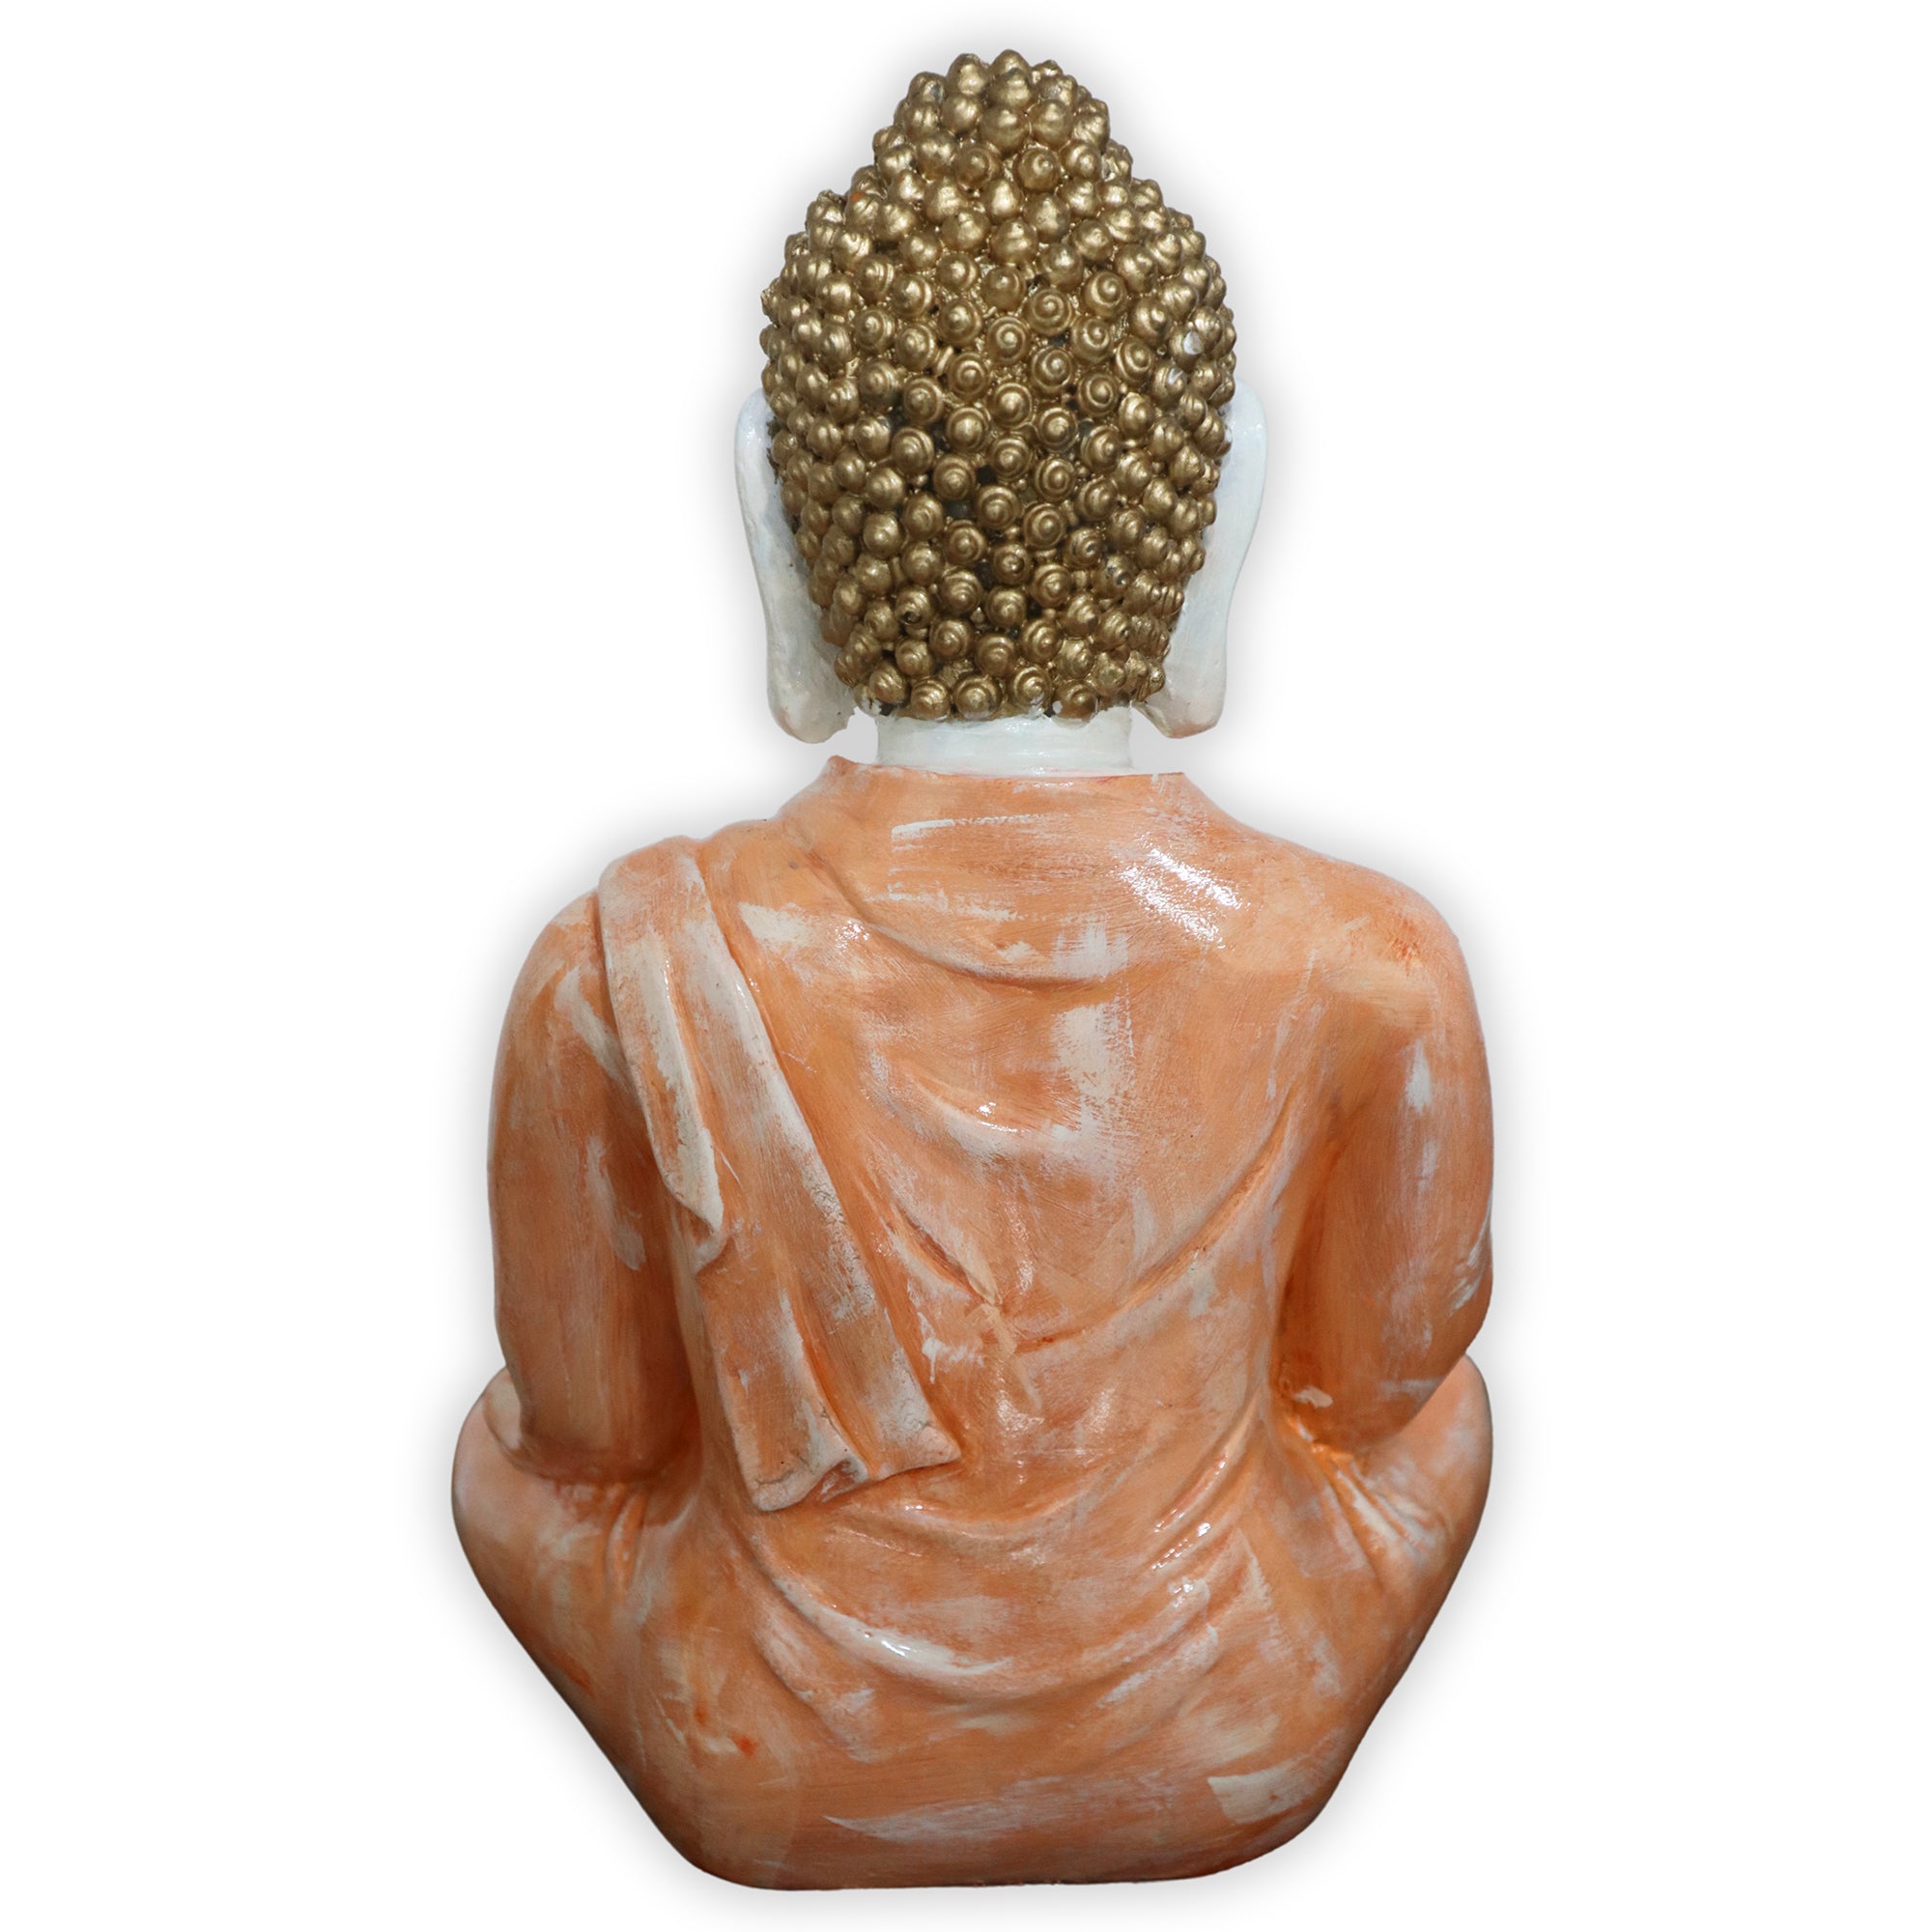 White And Orange Sitting Buddha Idol Statue Showpiece